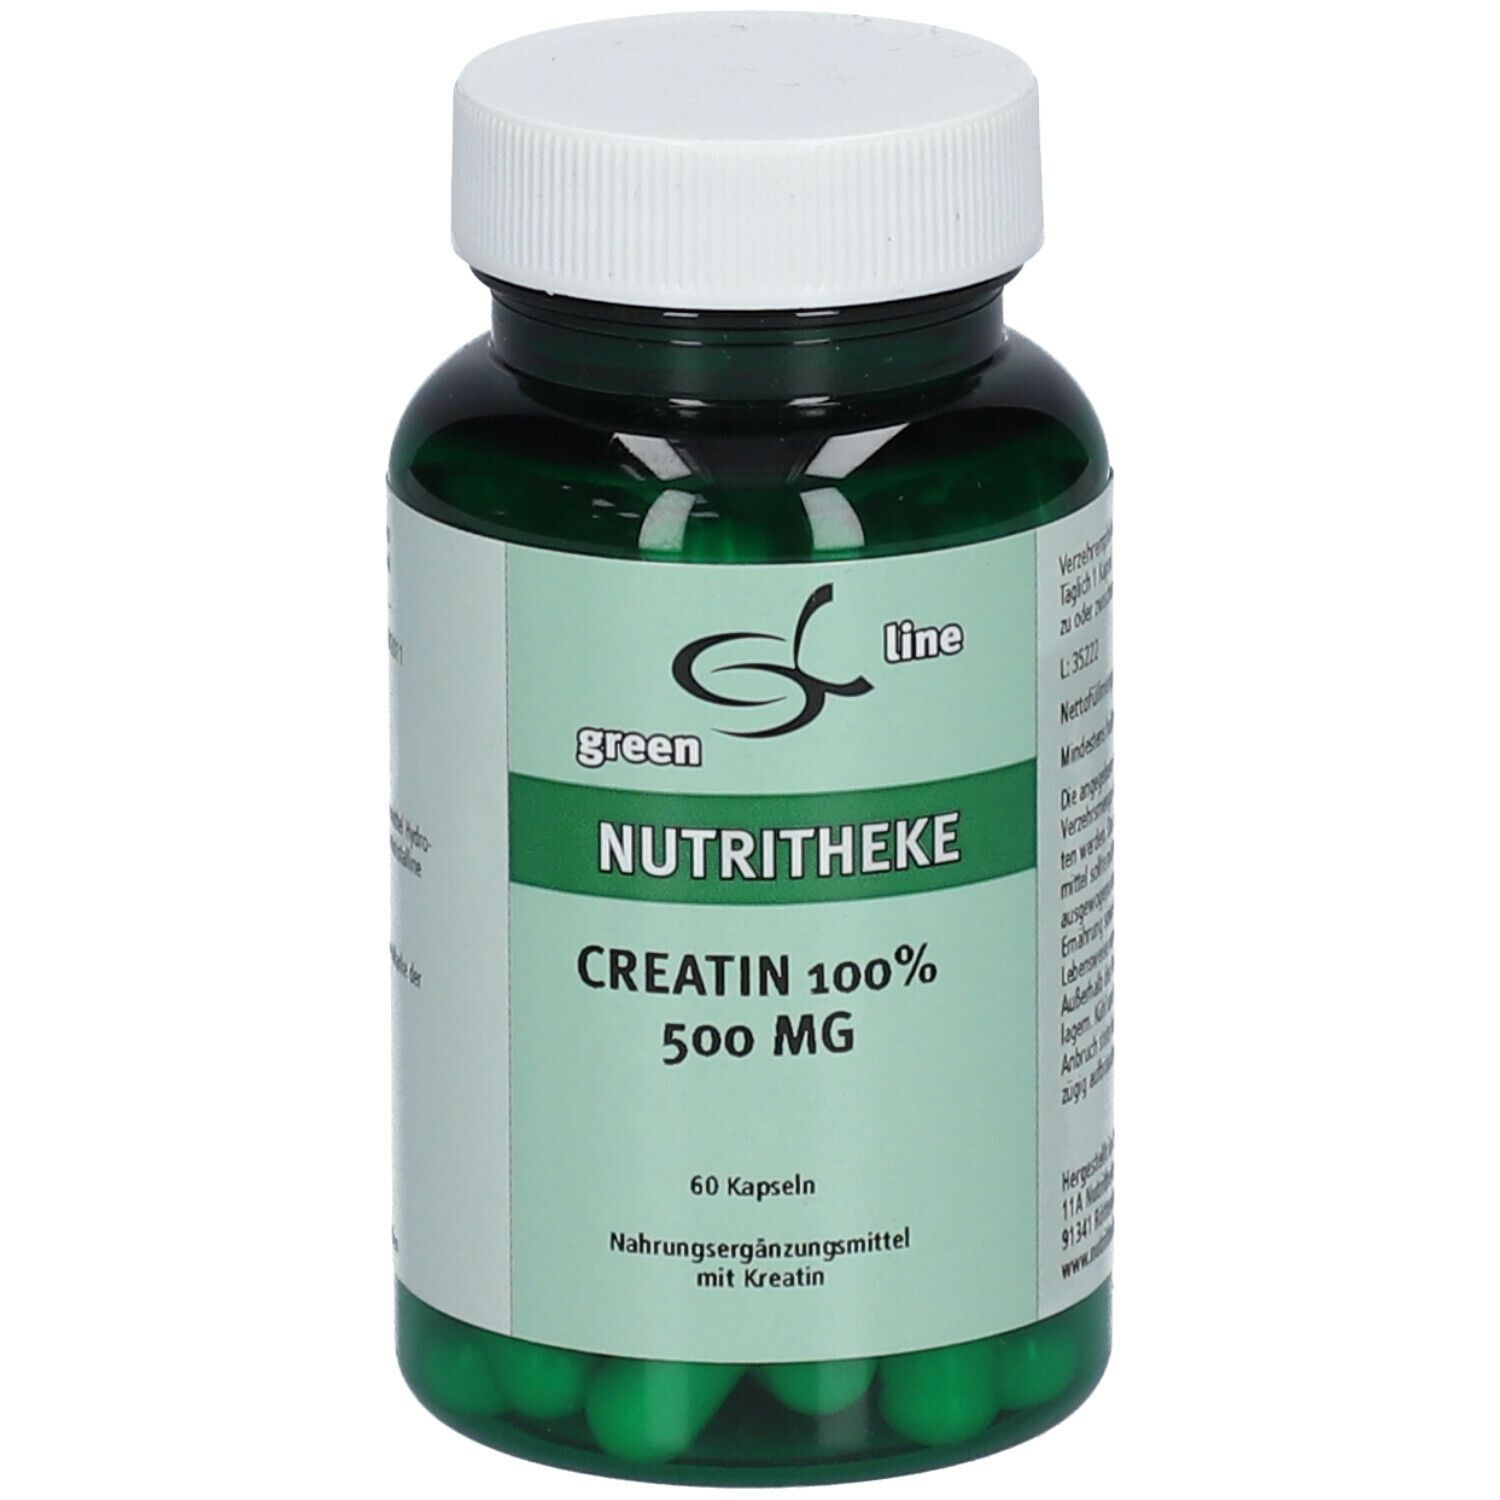 green line Creatin 100 % 500 mg